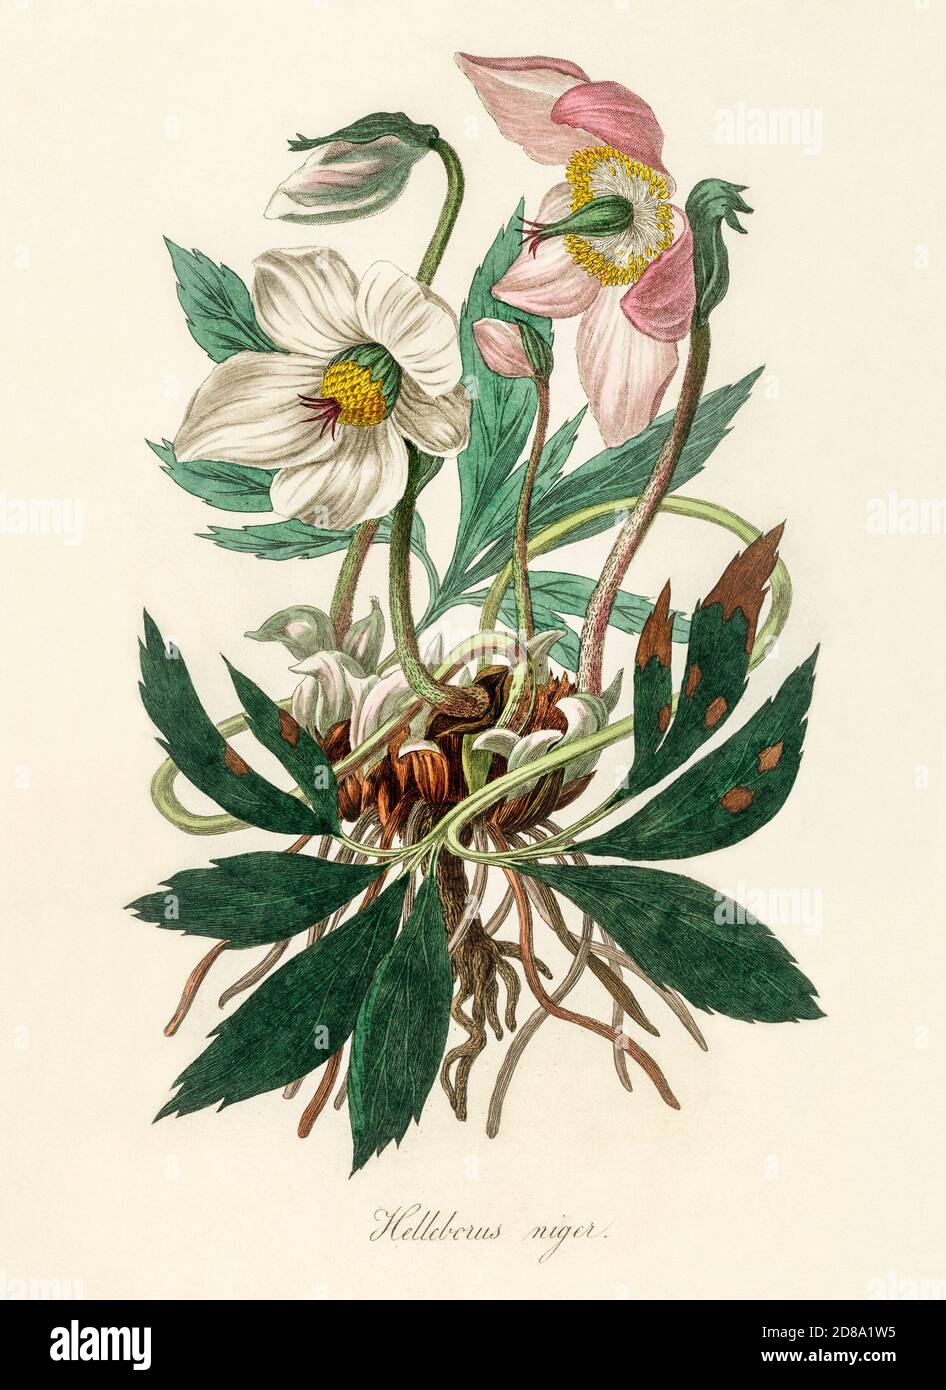 Christmas rose (Helleborus niger) illustration from Medical Botany (1836) by John Stephenson and James Morss Churchill. Stock Photo